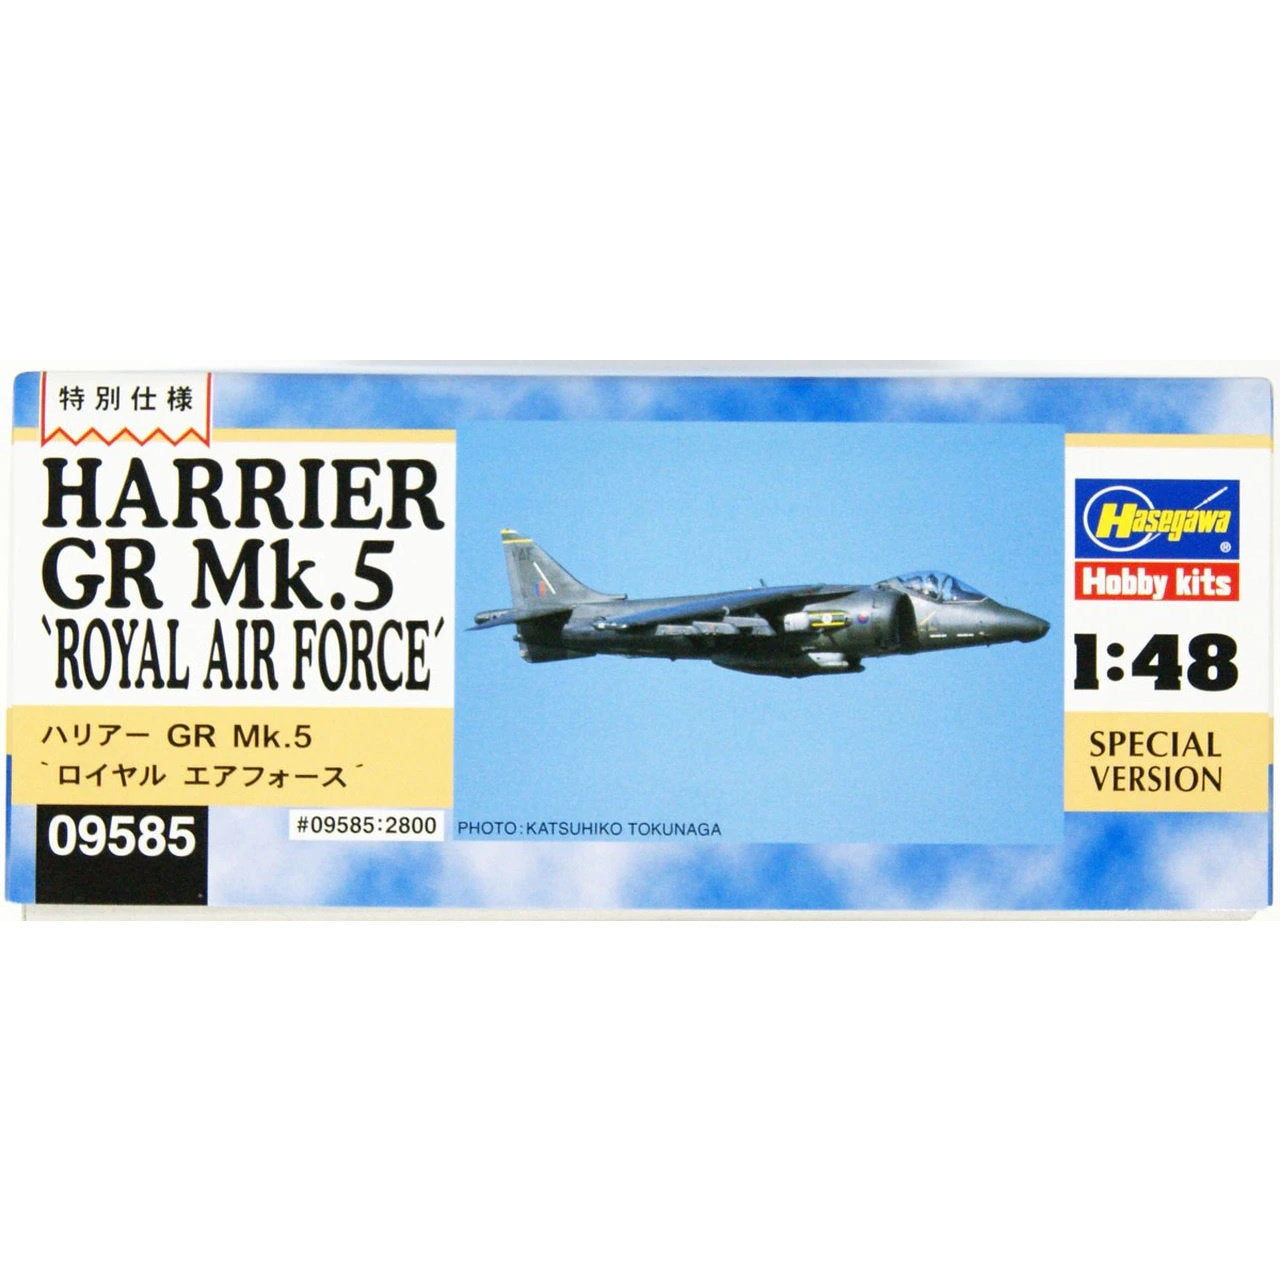 Harrier GR Mk.5 'Royal Air Force' 1/48 #09585 by Hasegawa